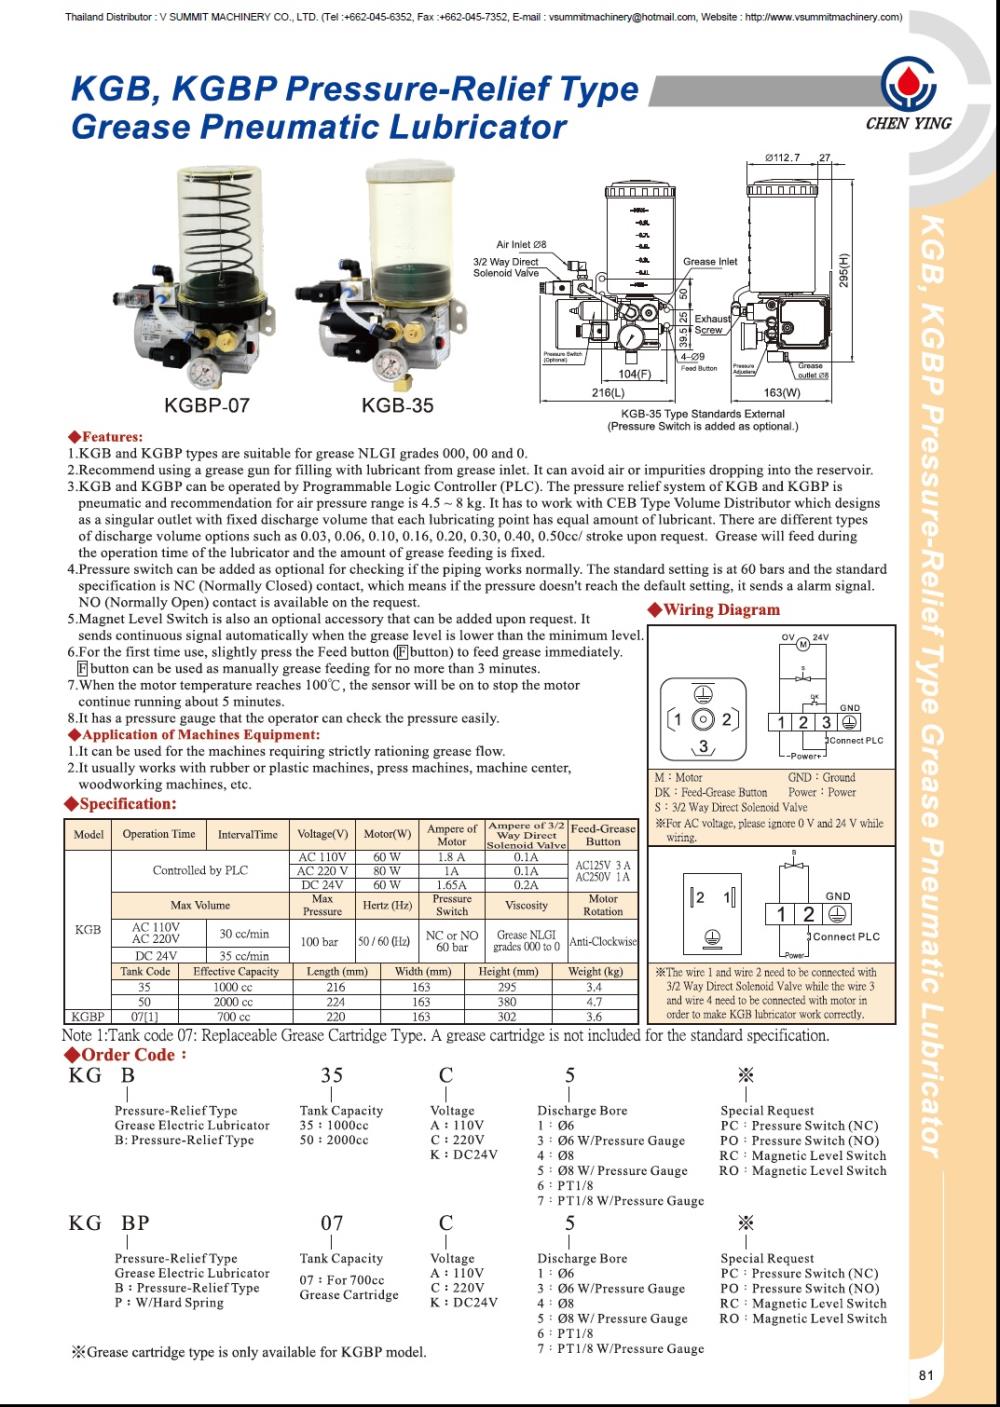 KGB Pressure-Relief Type Grease Pneumatic Lubricator, ปั๊มจารบีออโต้ใช้ลมประเภทแรงดันระบบ PLC, เครื่องจ่ายจารบีออโต้ใช้ลมประเภทแรงดันระบบ PLC, กาจ่ายจารบีออโต้ใช้ลมประเภทแรงดันระบบ PLC, ปั๊มจารบีไฟฟ้าใช้ลมประเภทแรงดันระบบ PLC, เครื่องจ่ายจารบีไฟฟ้าใช้ลมประเภทแรงดันระบบ PLC, กาจารบีไฟฟ้าใช้ลมประเภทแรงดันระบบ PLC 